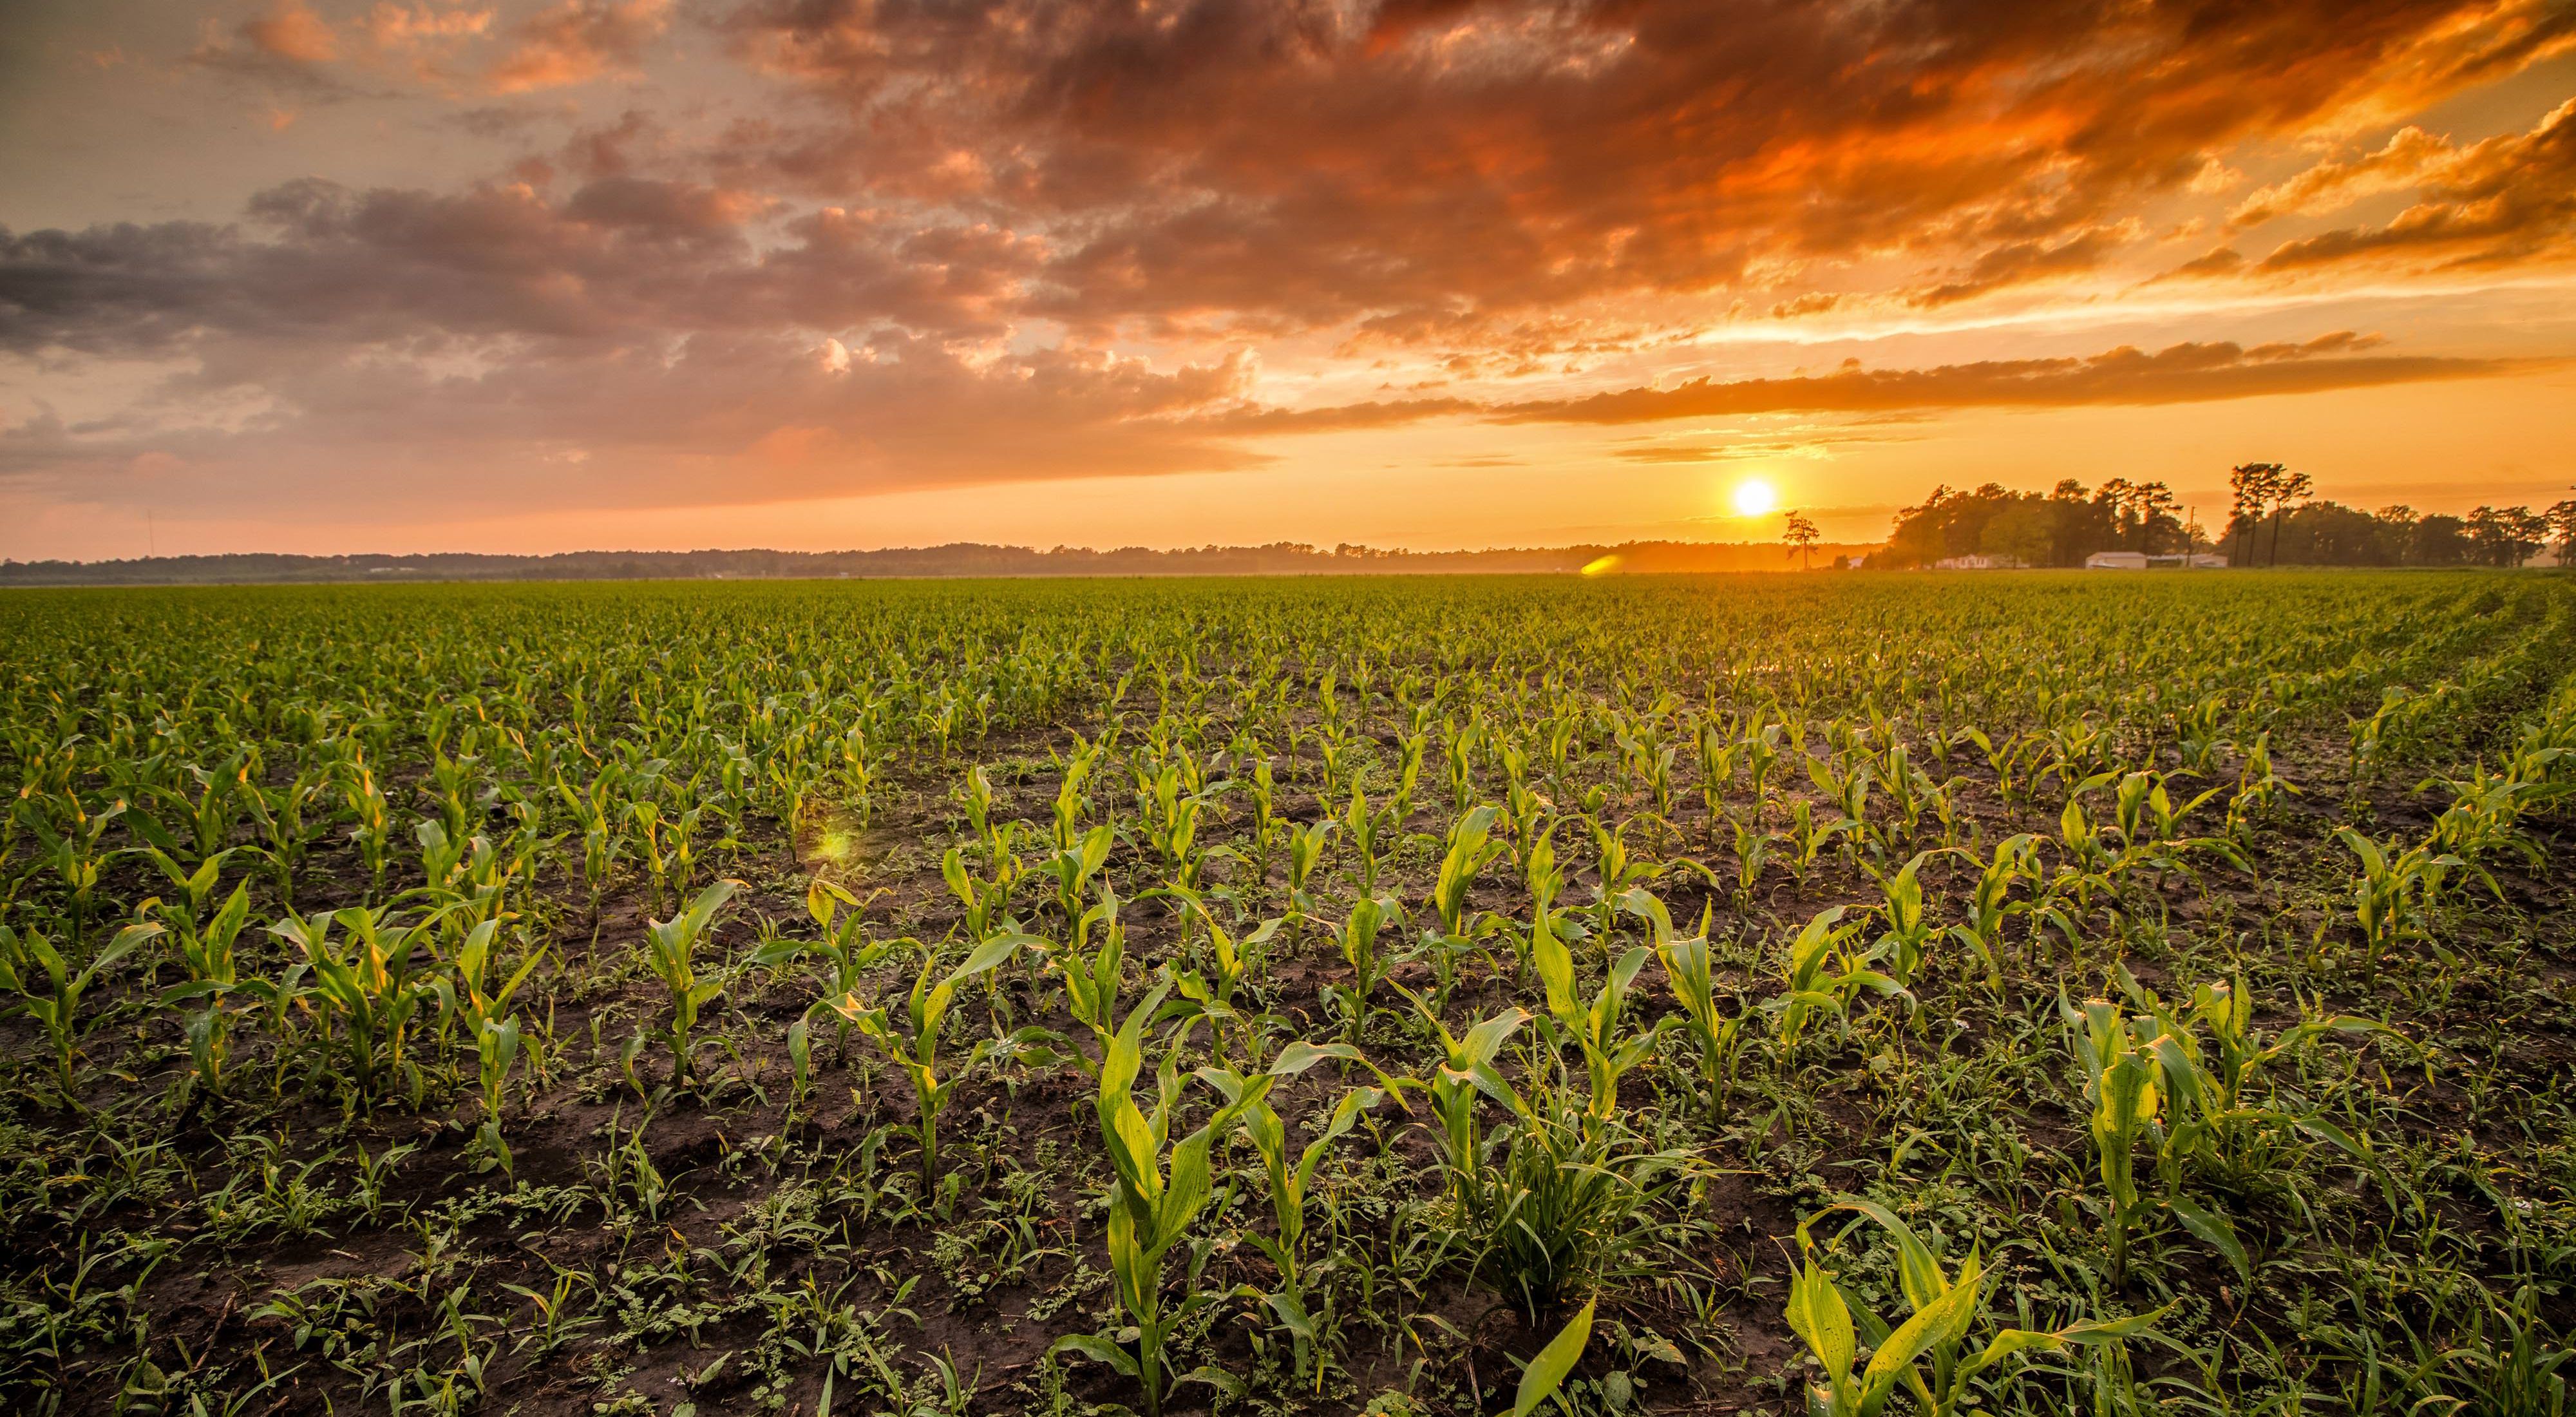 Corn fields outside of Arapahoe, North Carolina at sunset.